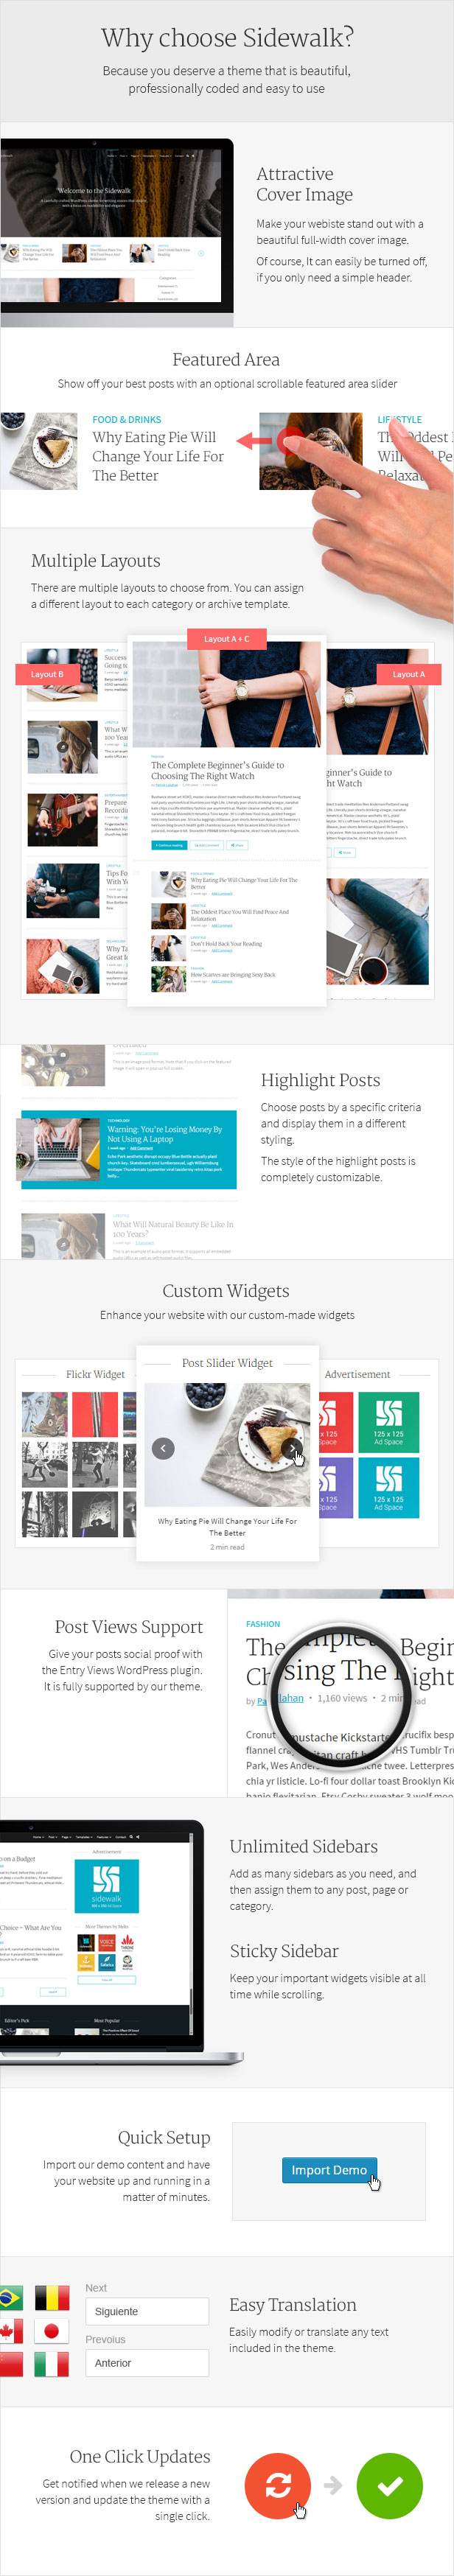 Sidewalk - Elegant Personal Blog WordPress Theme